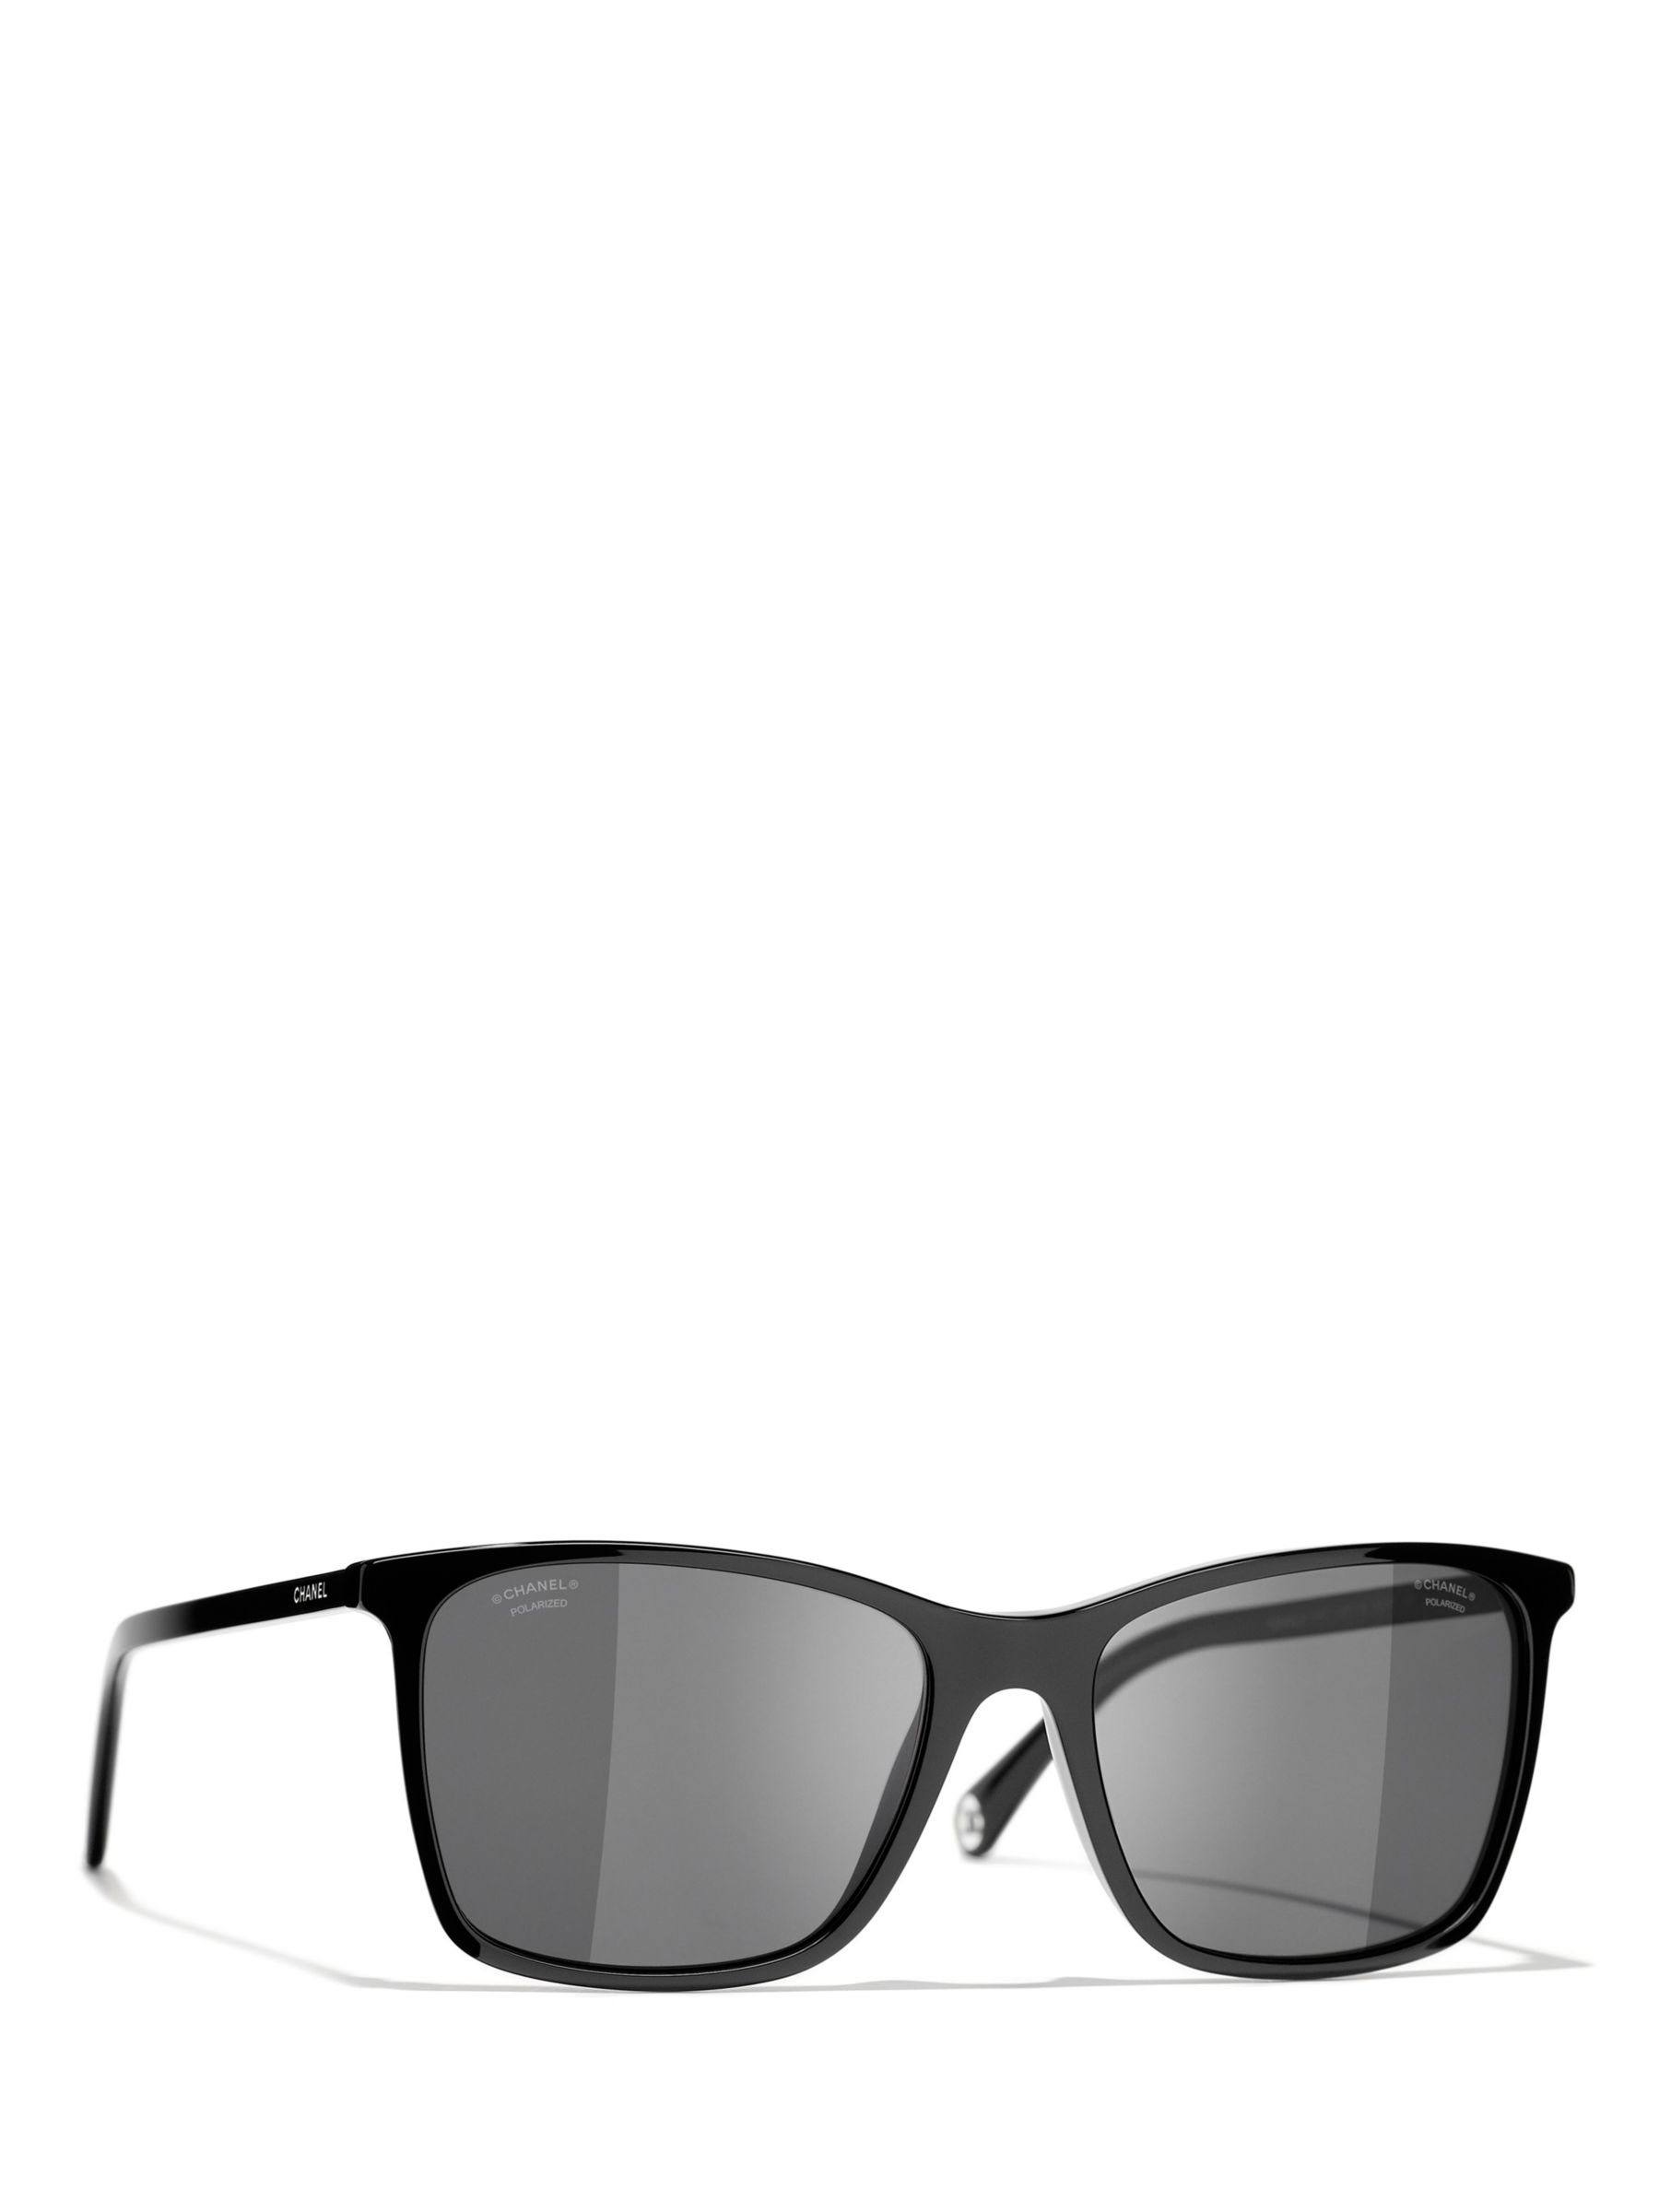 CHANEL Rectangular Sunglasses CH5447 Black/Grey at John Lewis